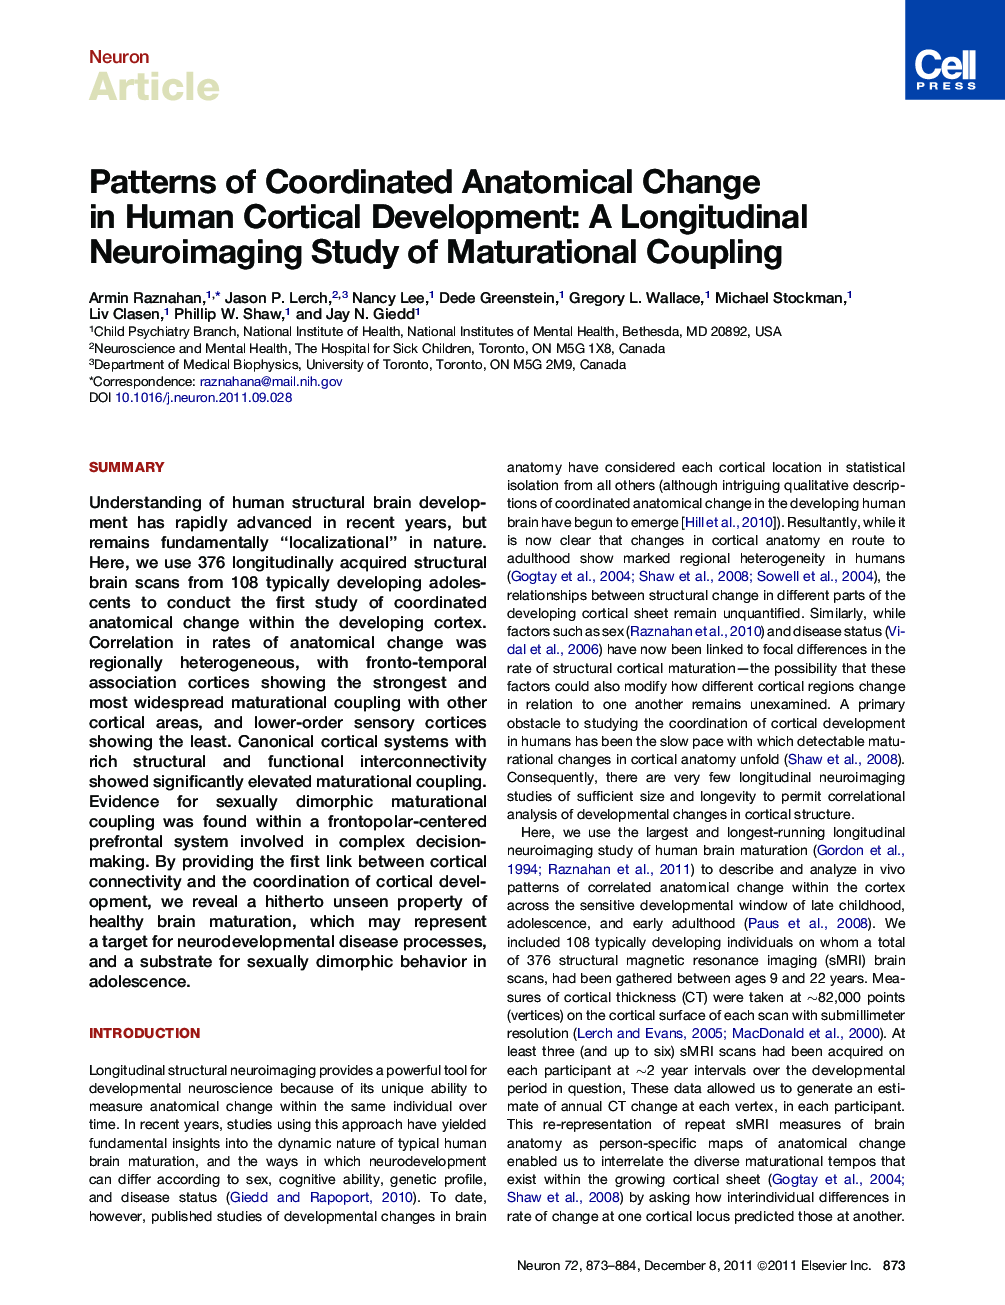 Patterns of Coordinated Anatomical Change in Human Cortical Development: A Longitudinal Neuroimaging Study of Maturational Coupling